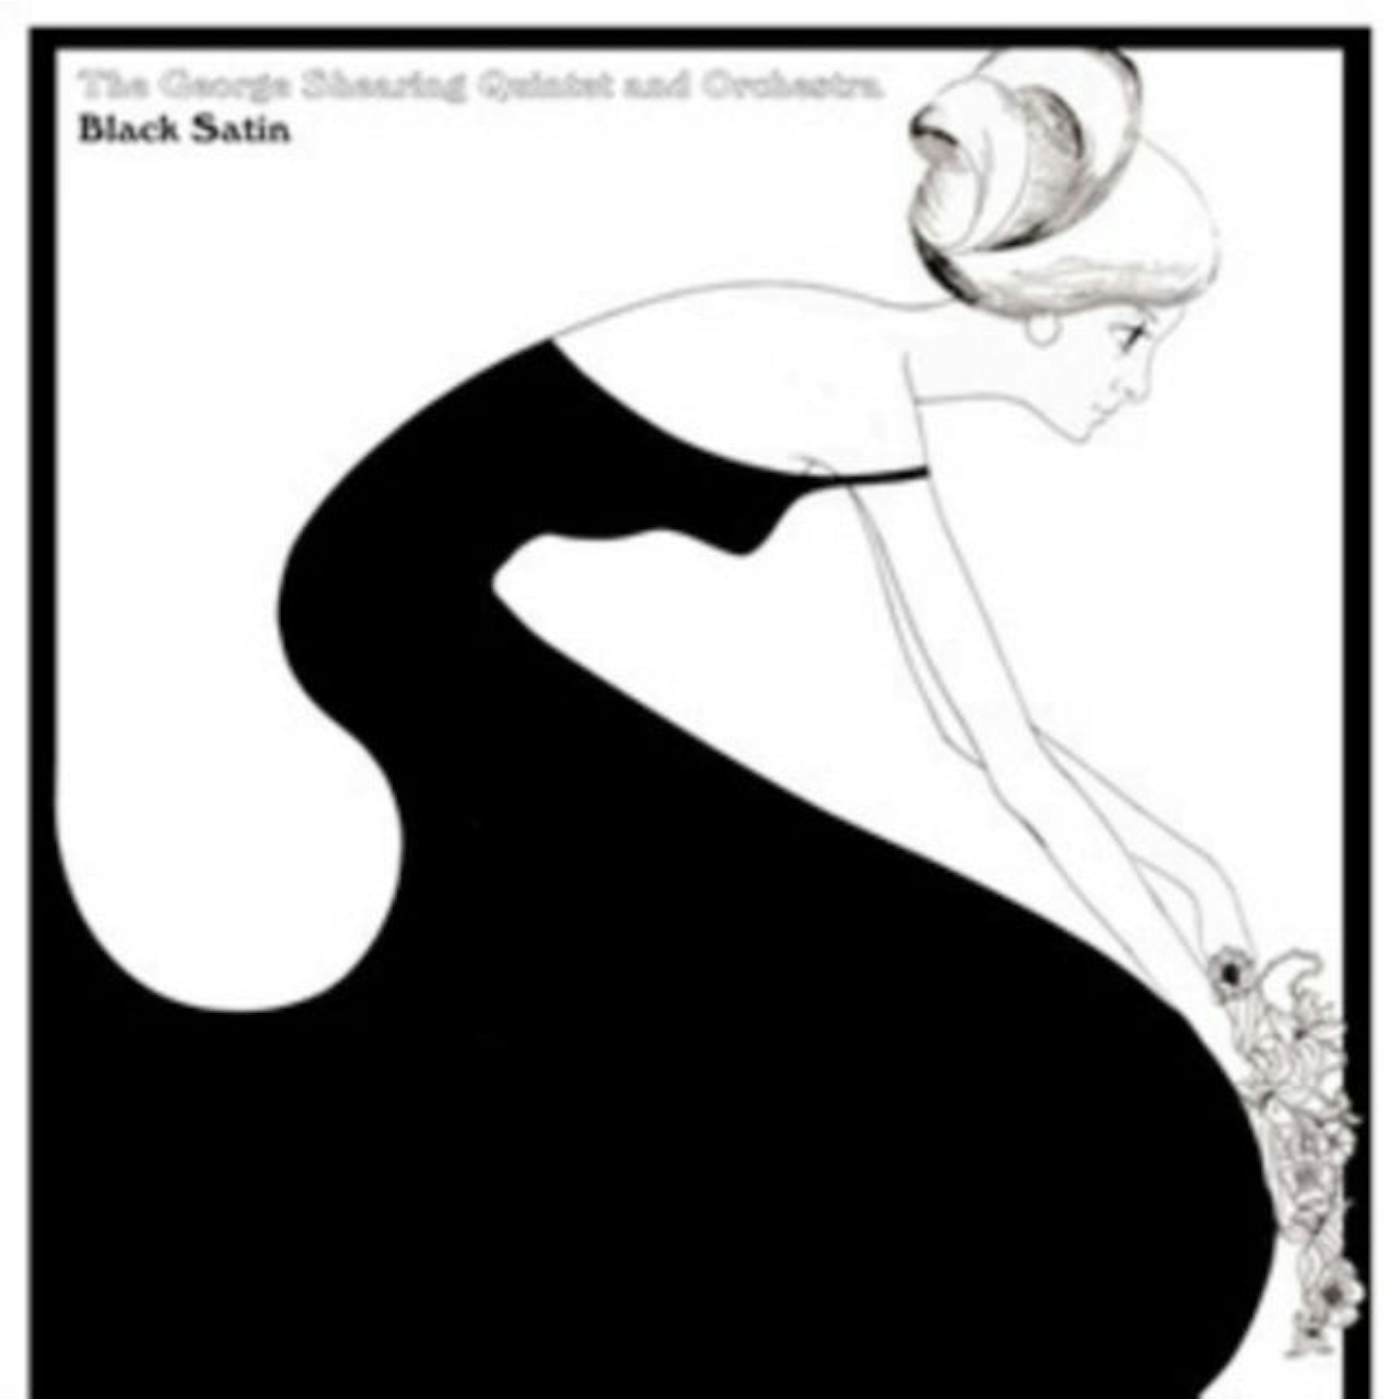 George Shearing CD - Black Satin